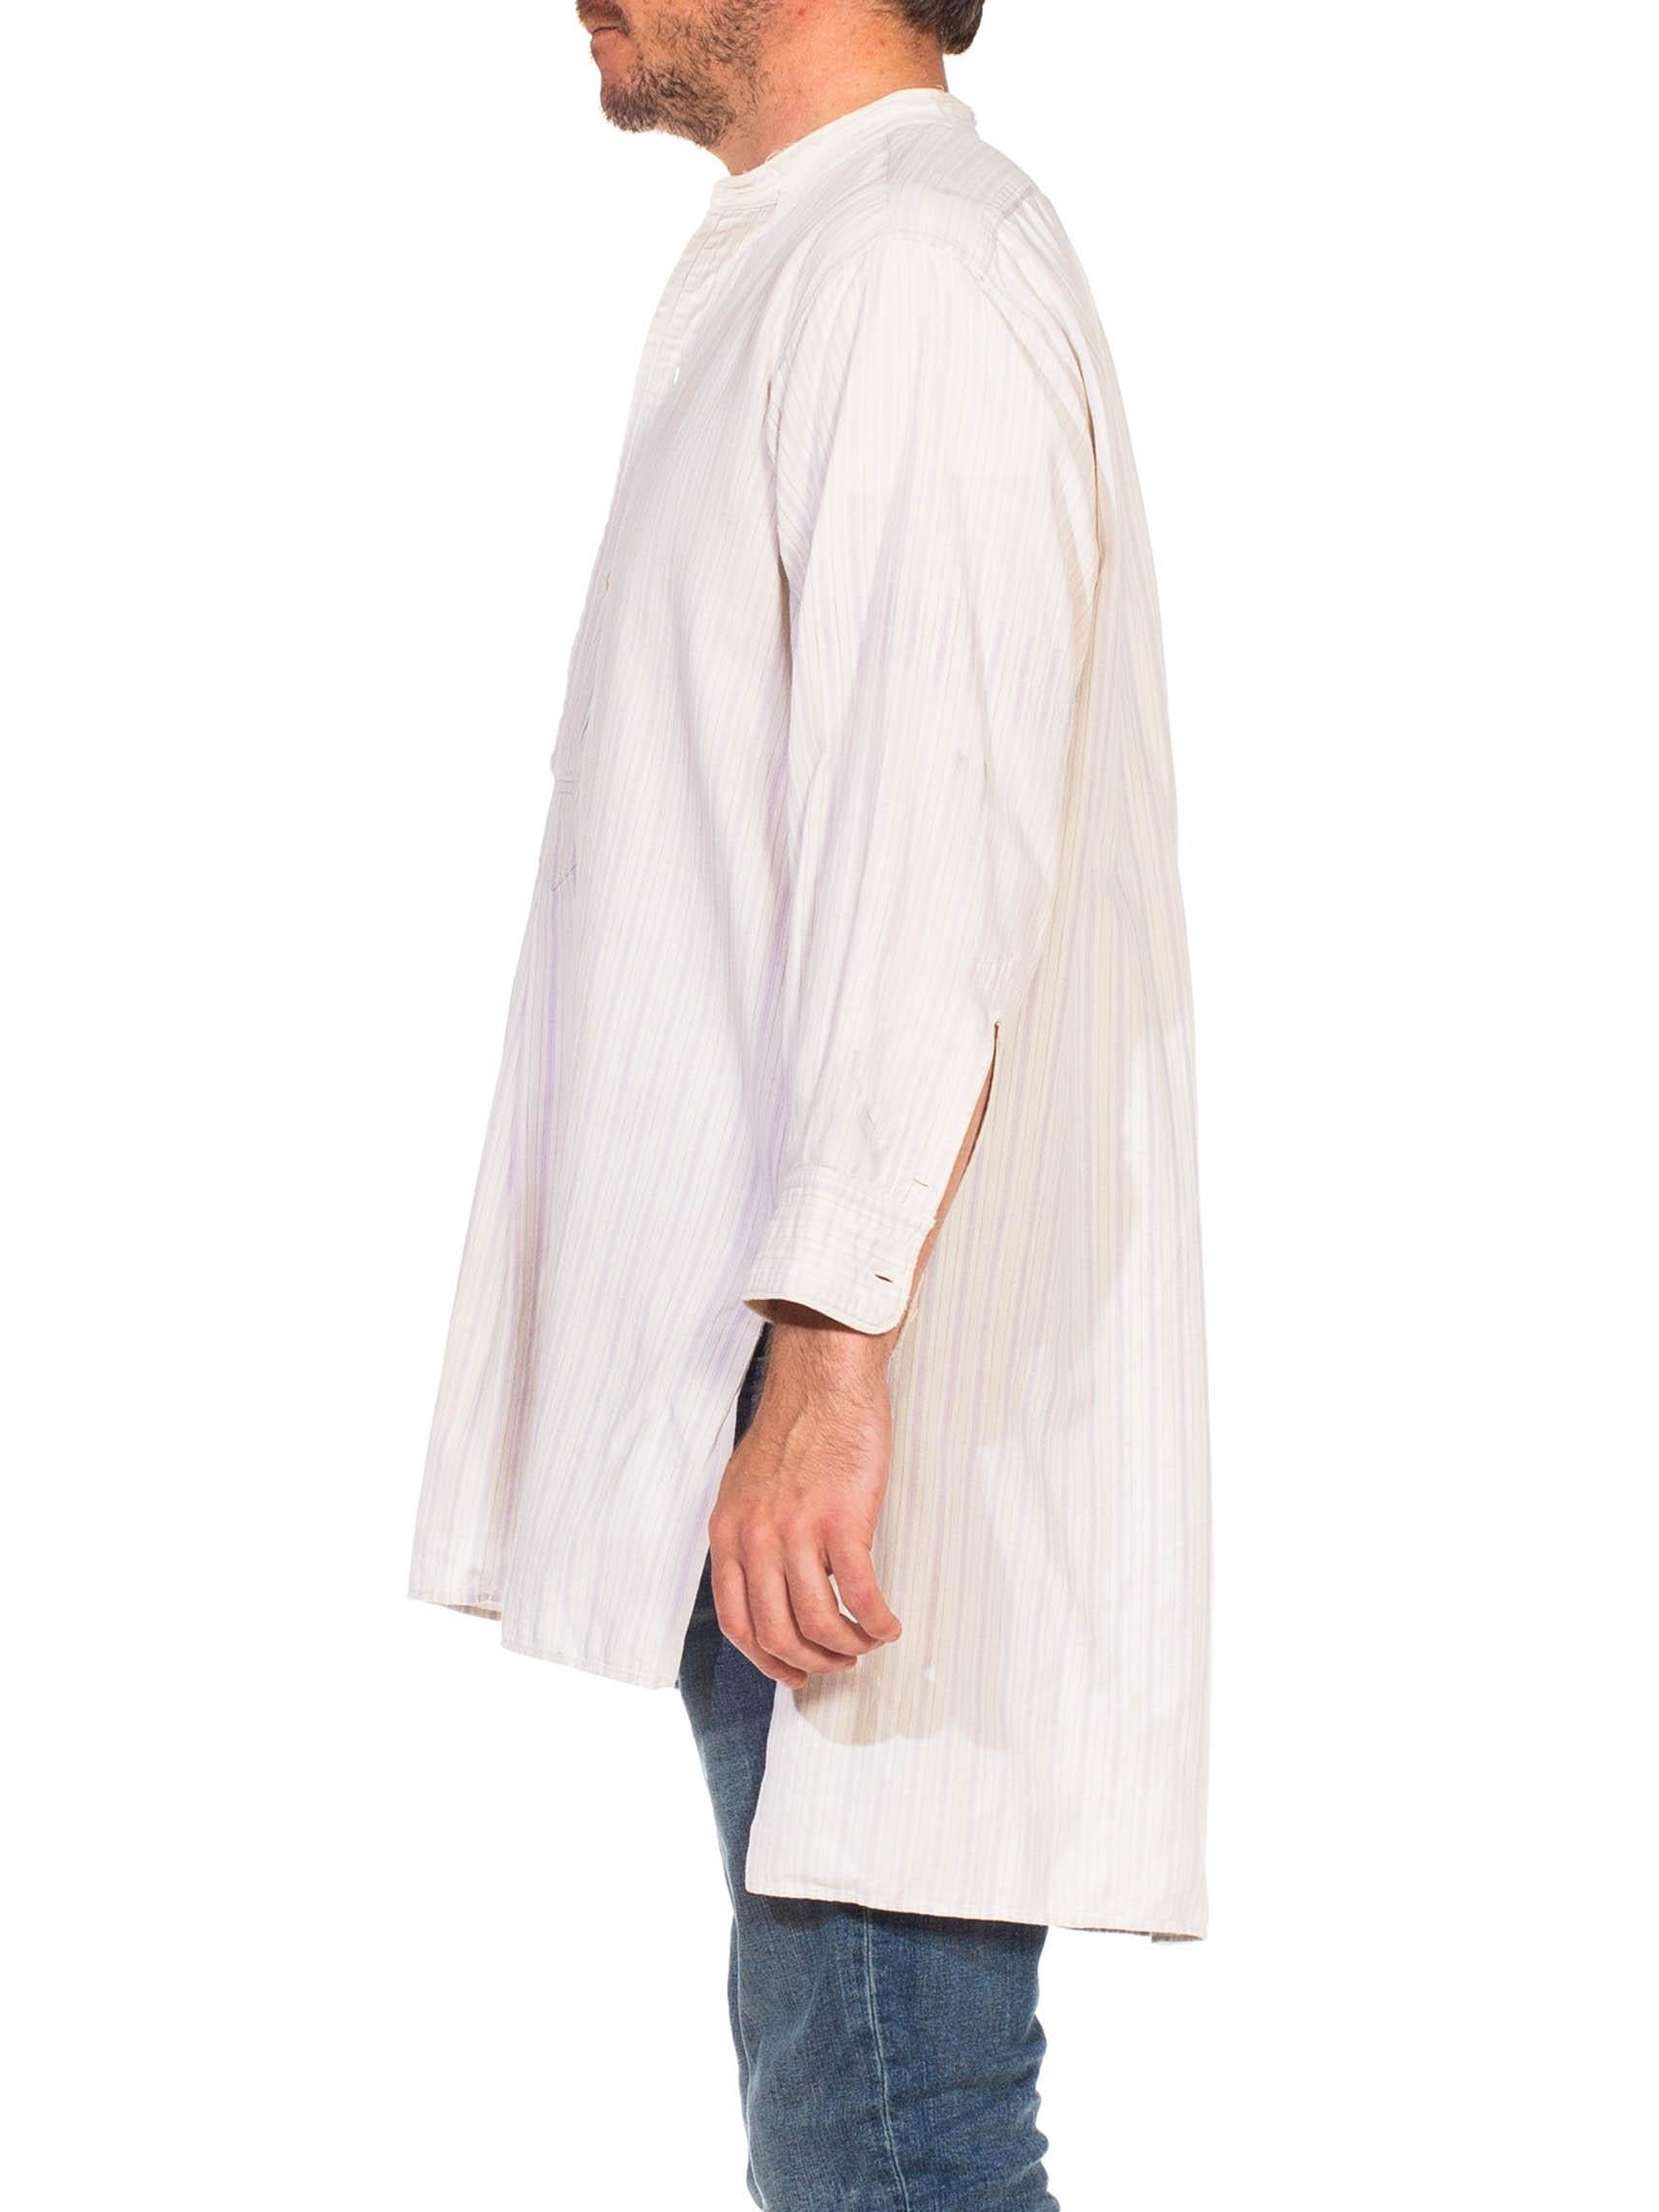 Chemise à pull pour hommes Victorian White & Lilas Striped Organic Cotton Distressed Antique